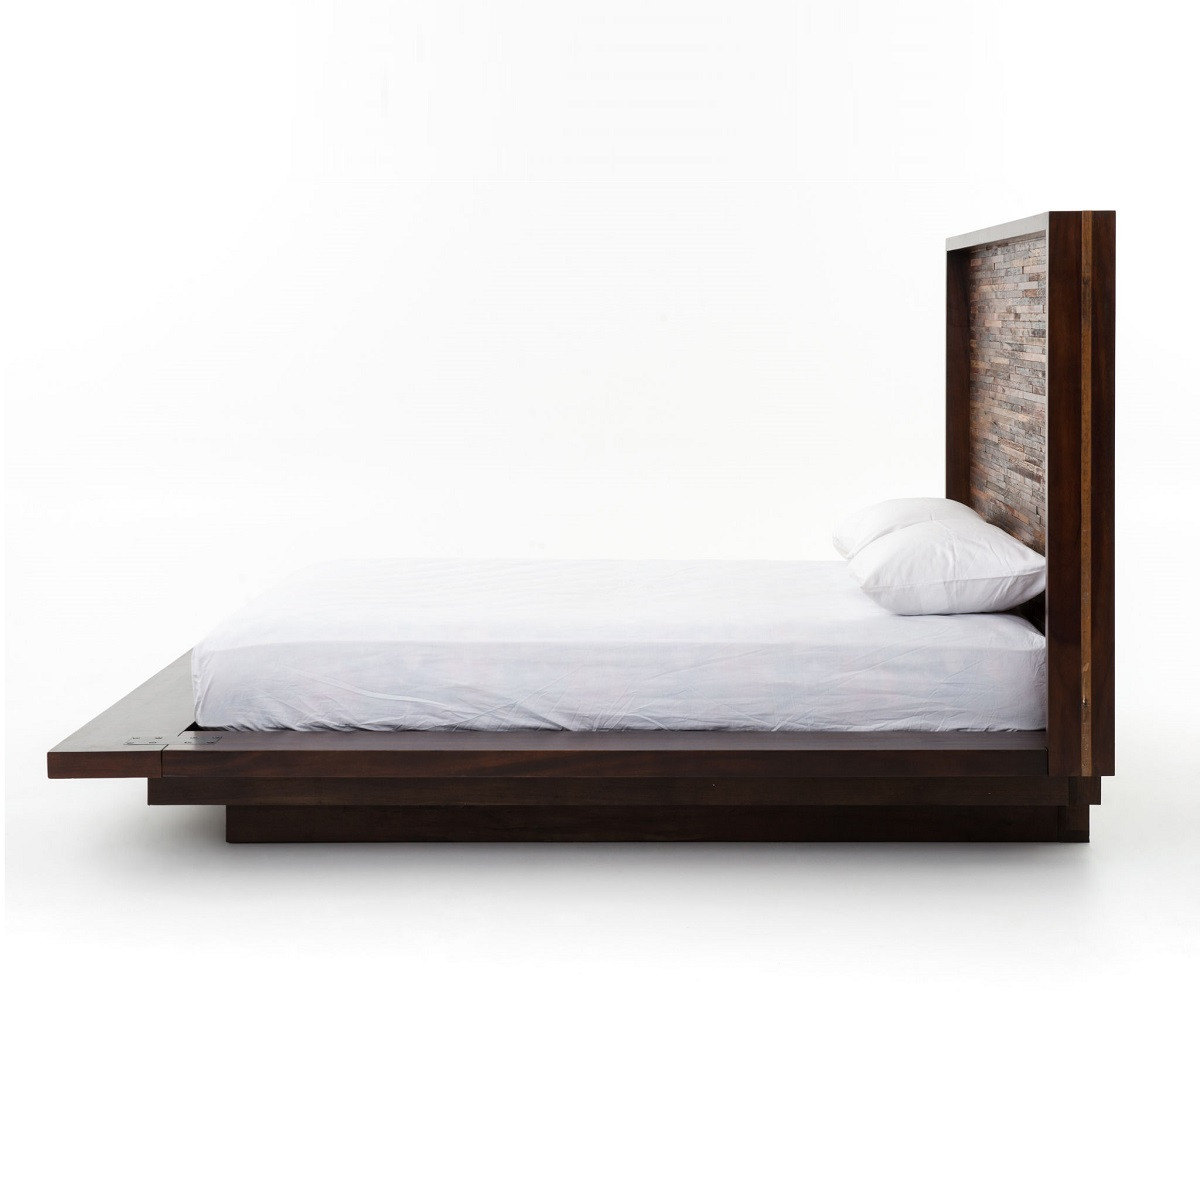 reclaimed wood bed frame king